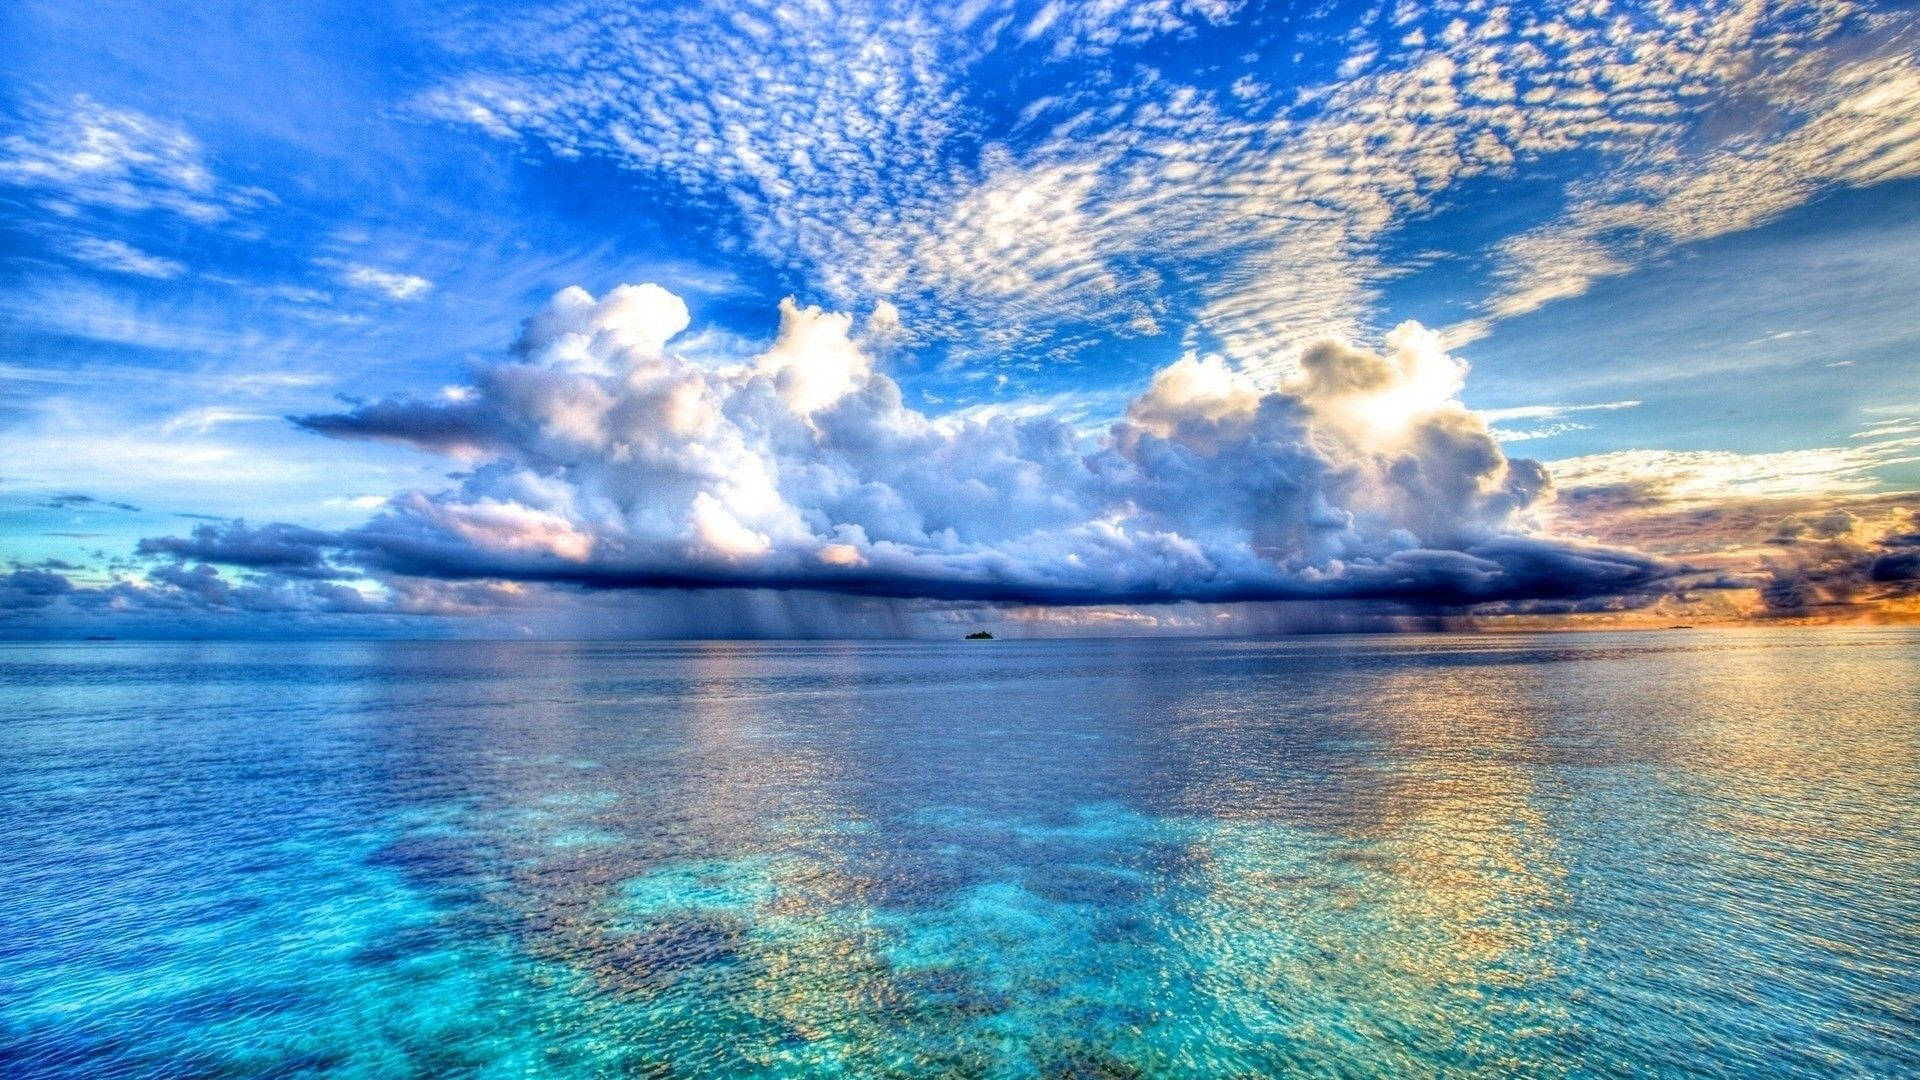 Aesthetic Ocean And Cloudy Sky Wallpaper